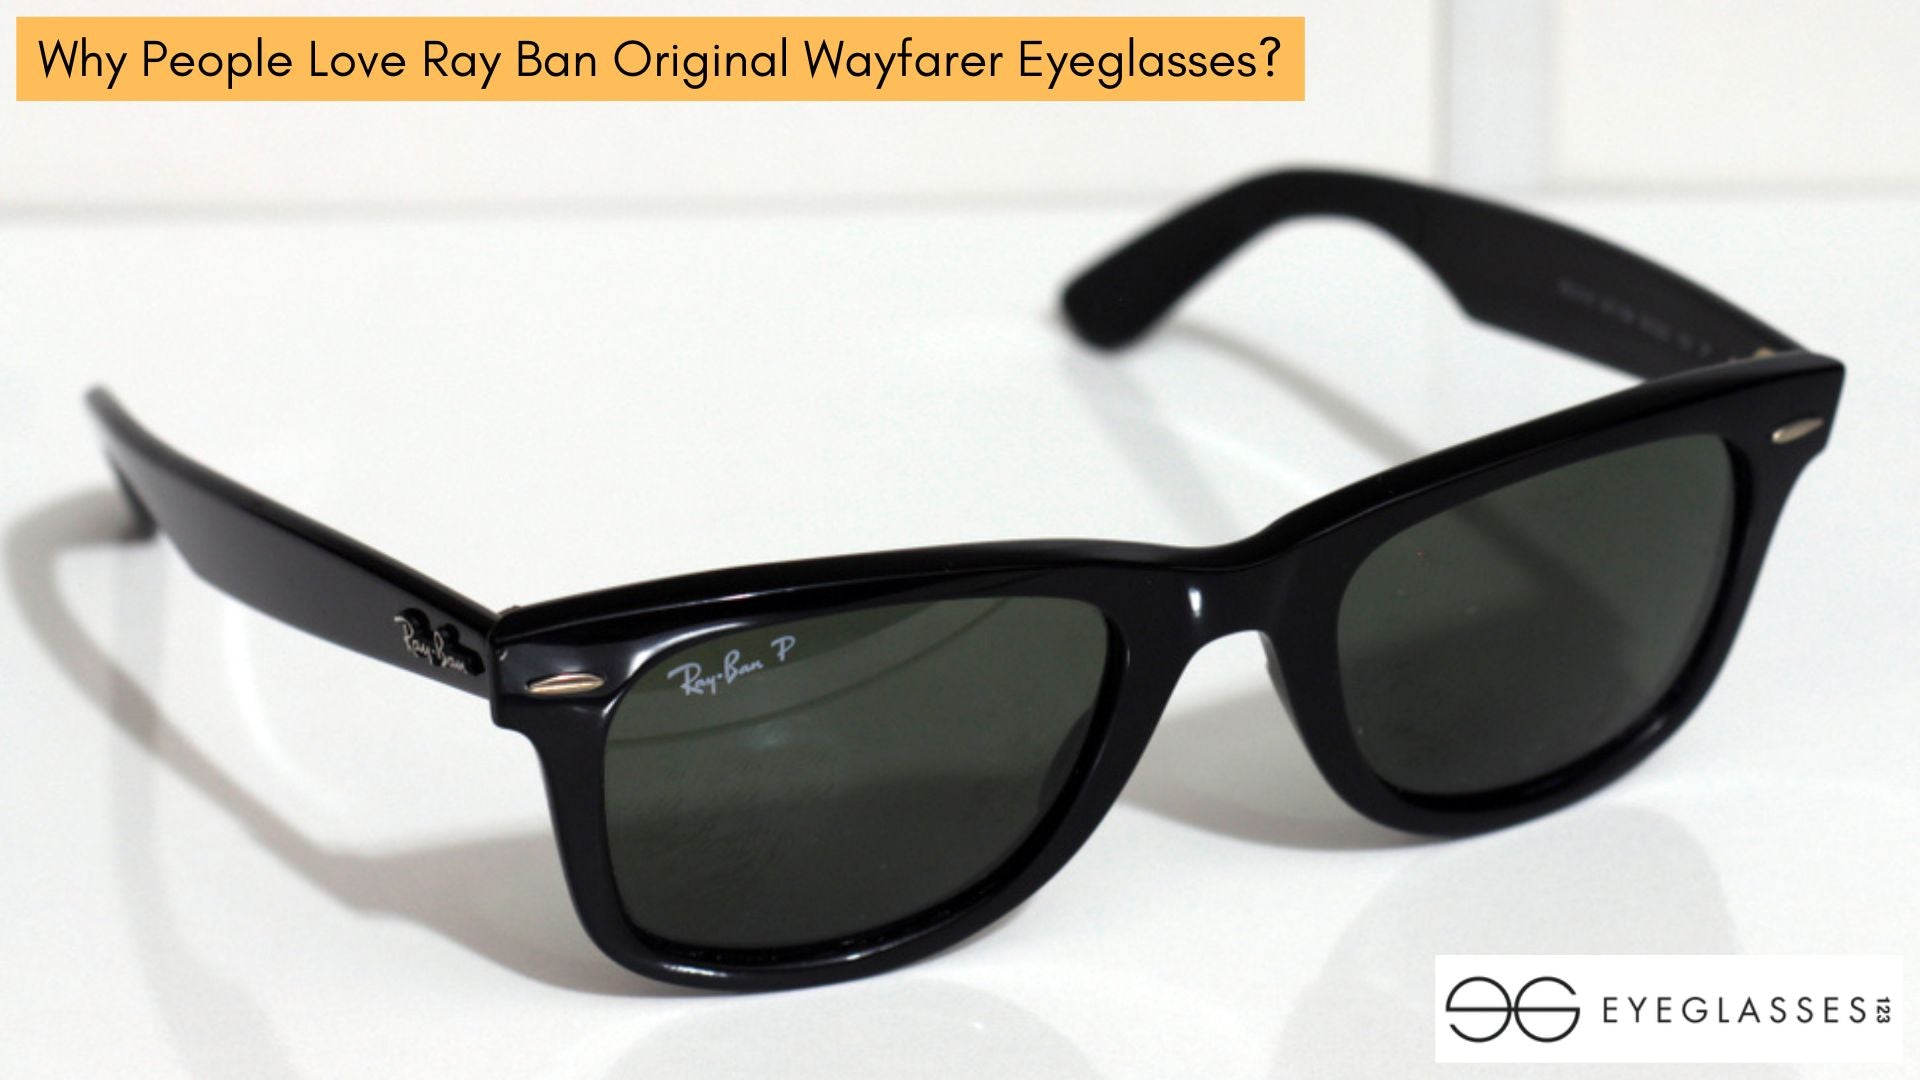 Why People Love Ray Ban Original Wayfarer Eyeglasses?